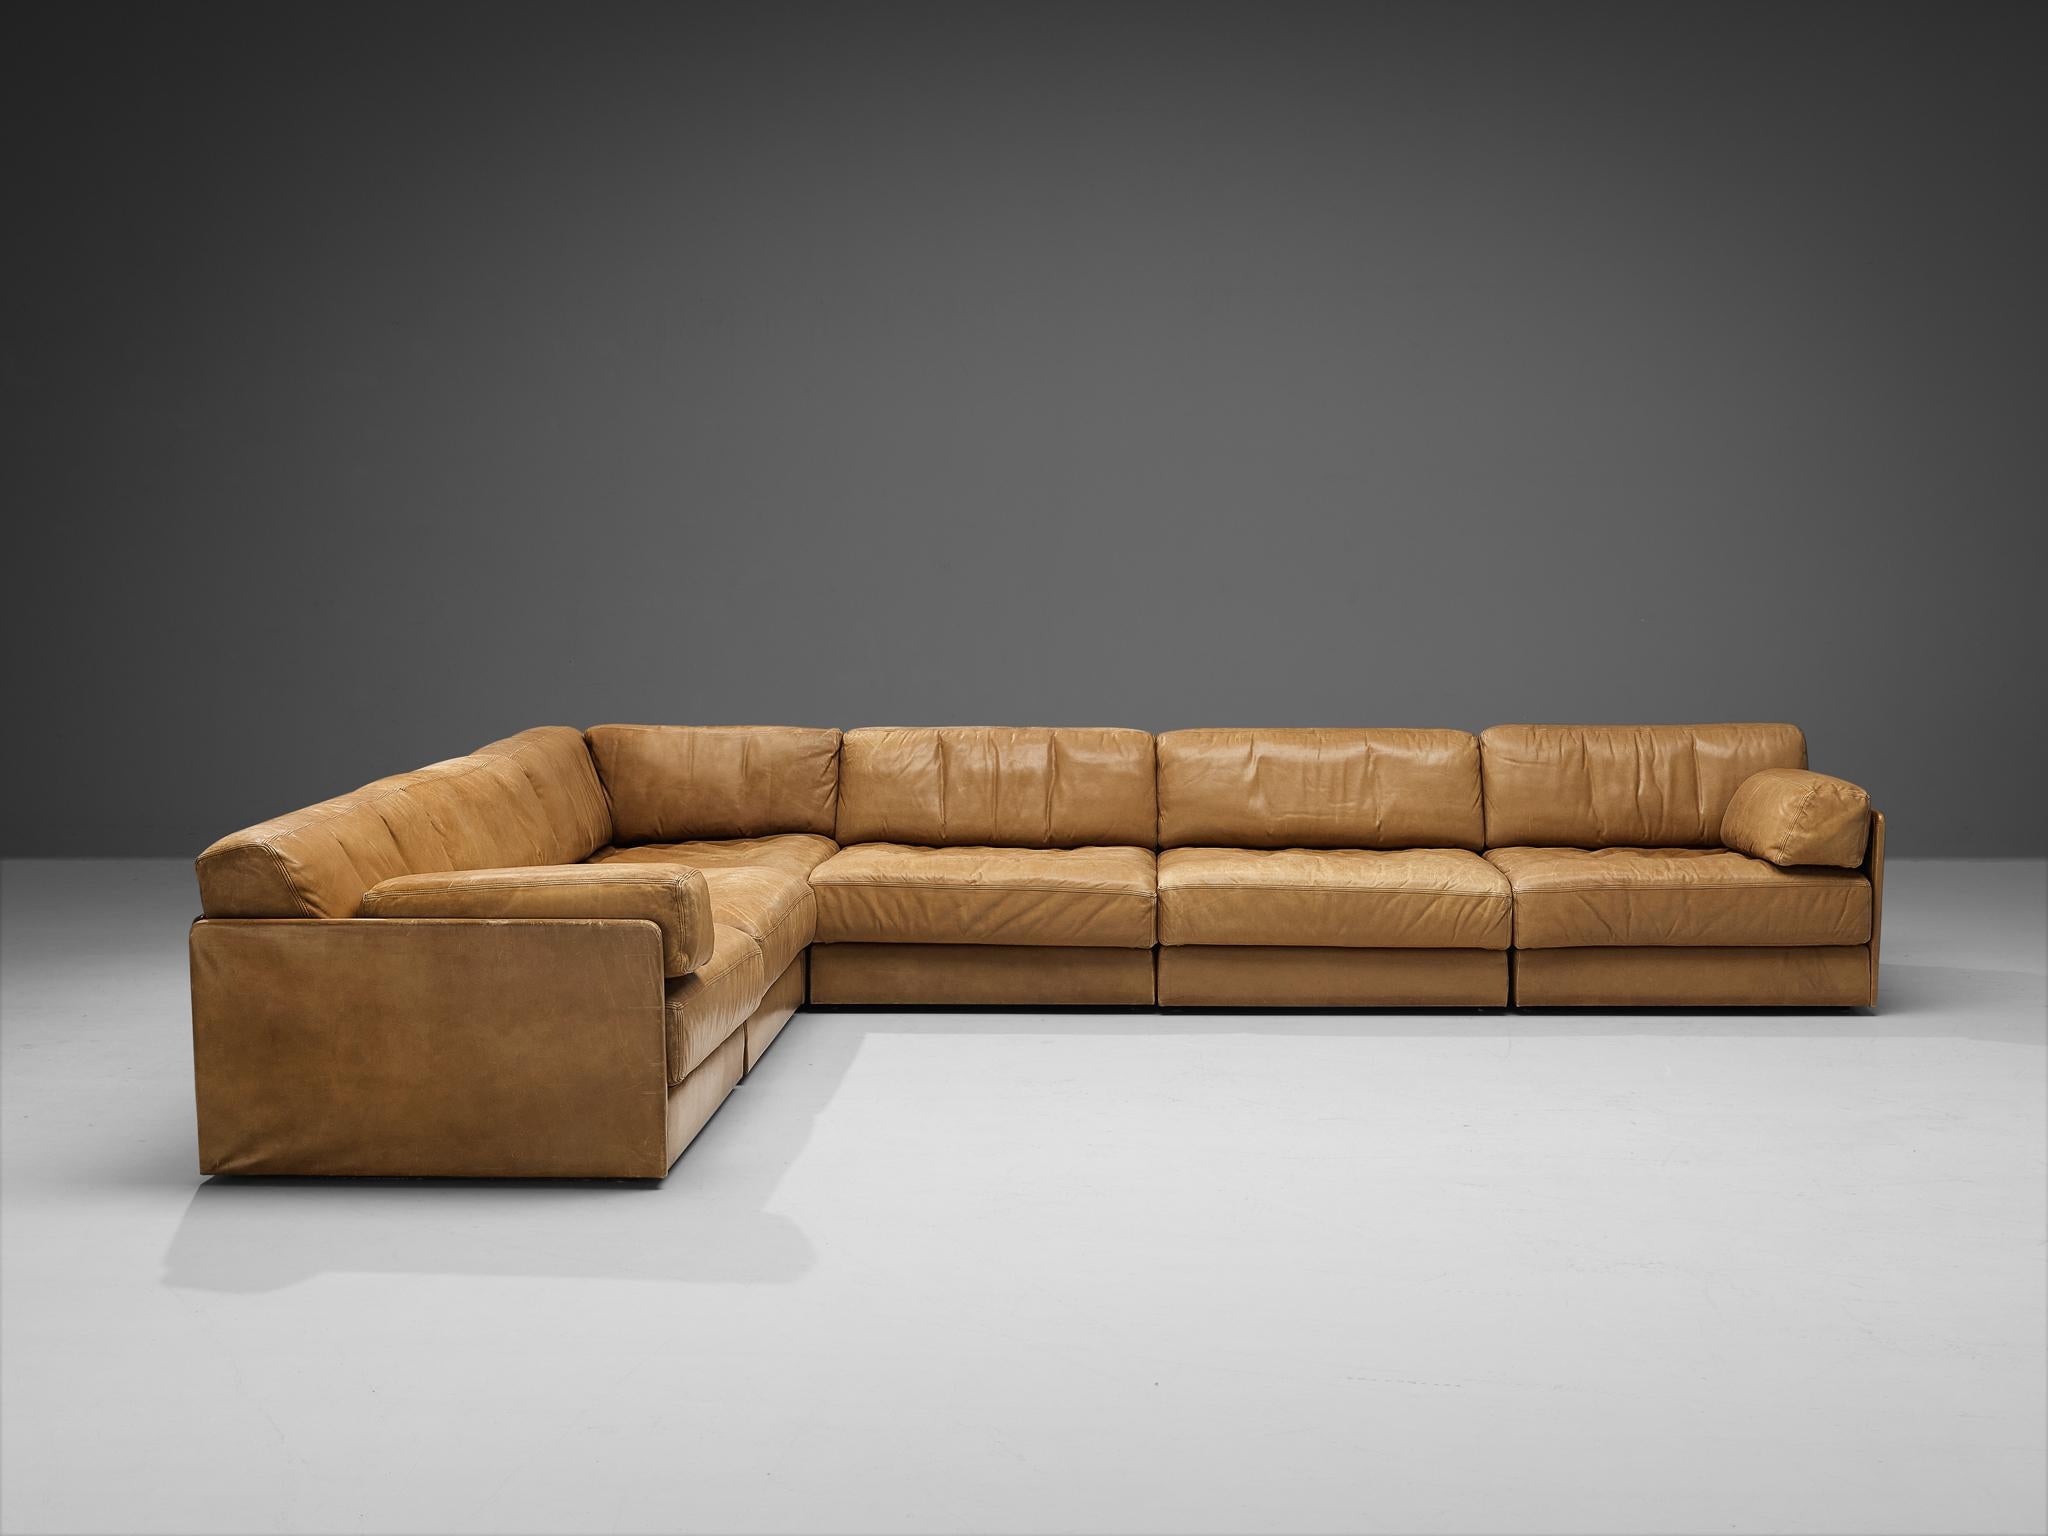 Swiss De Sede ‘DS-76’ Modular Sofa in Cognac Patinated Leather